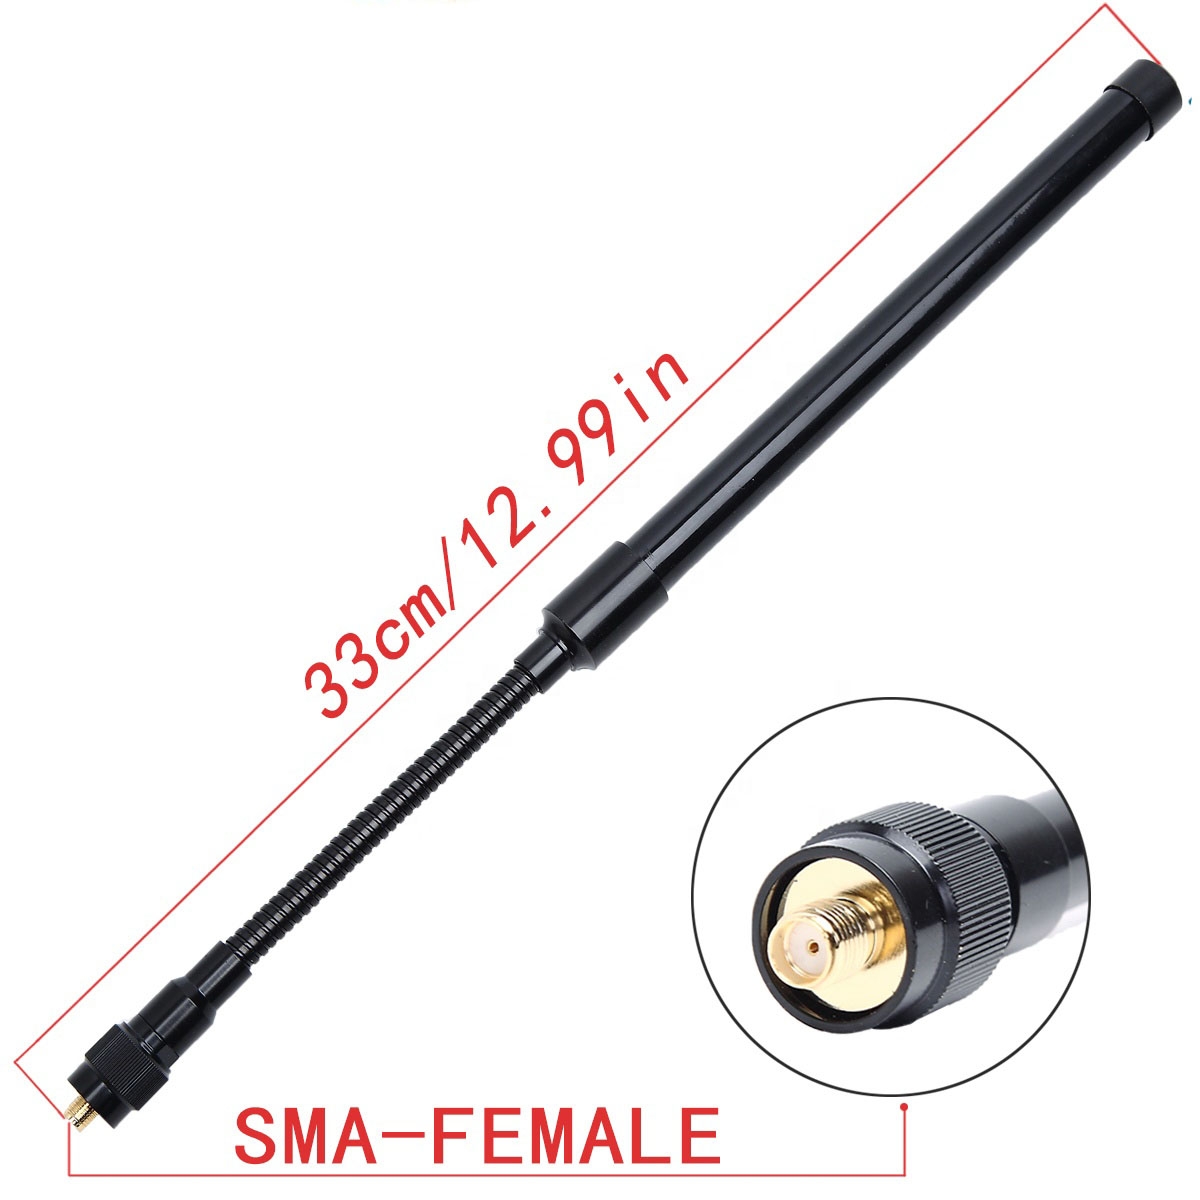 Sma-female Gooseneck Tactical Antenna For two way radios